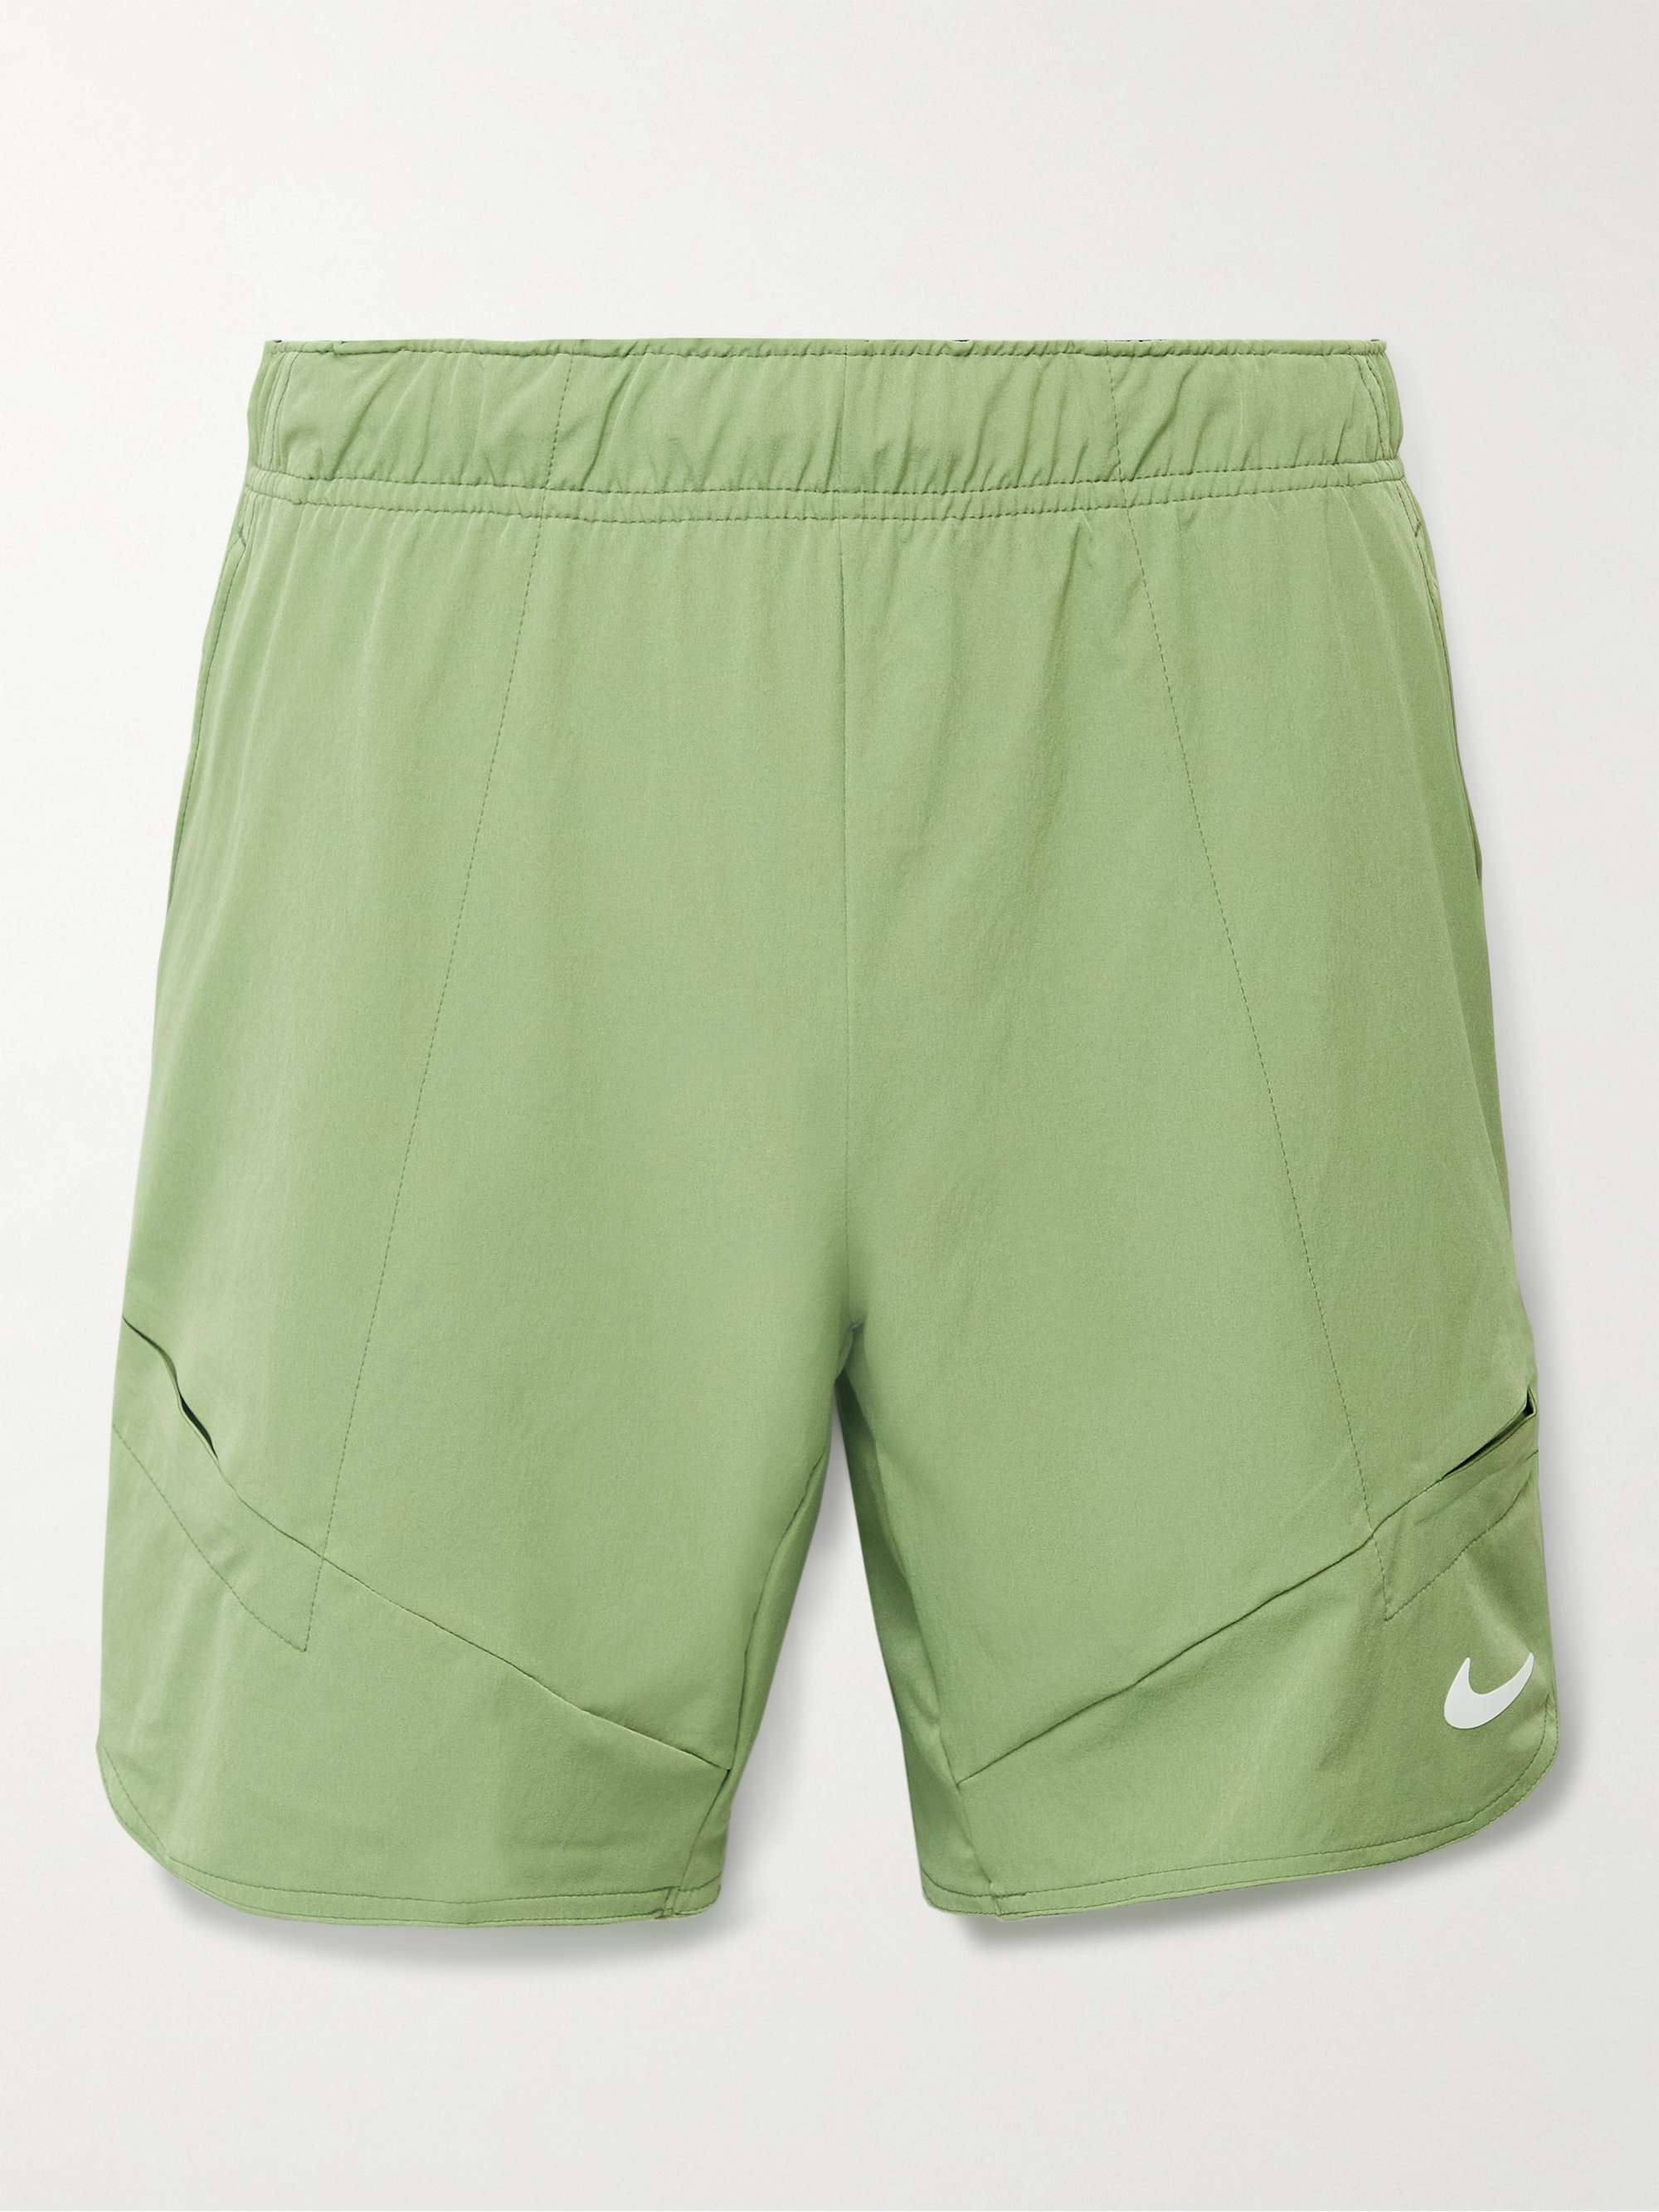 NIKE TENNIS NikeCourt ADV Straight-Leg Dri-FIT Tennis Shorts | MR PORTER